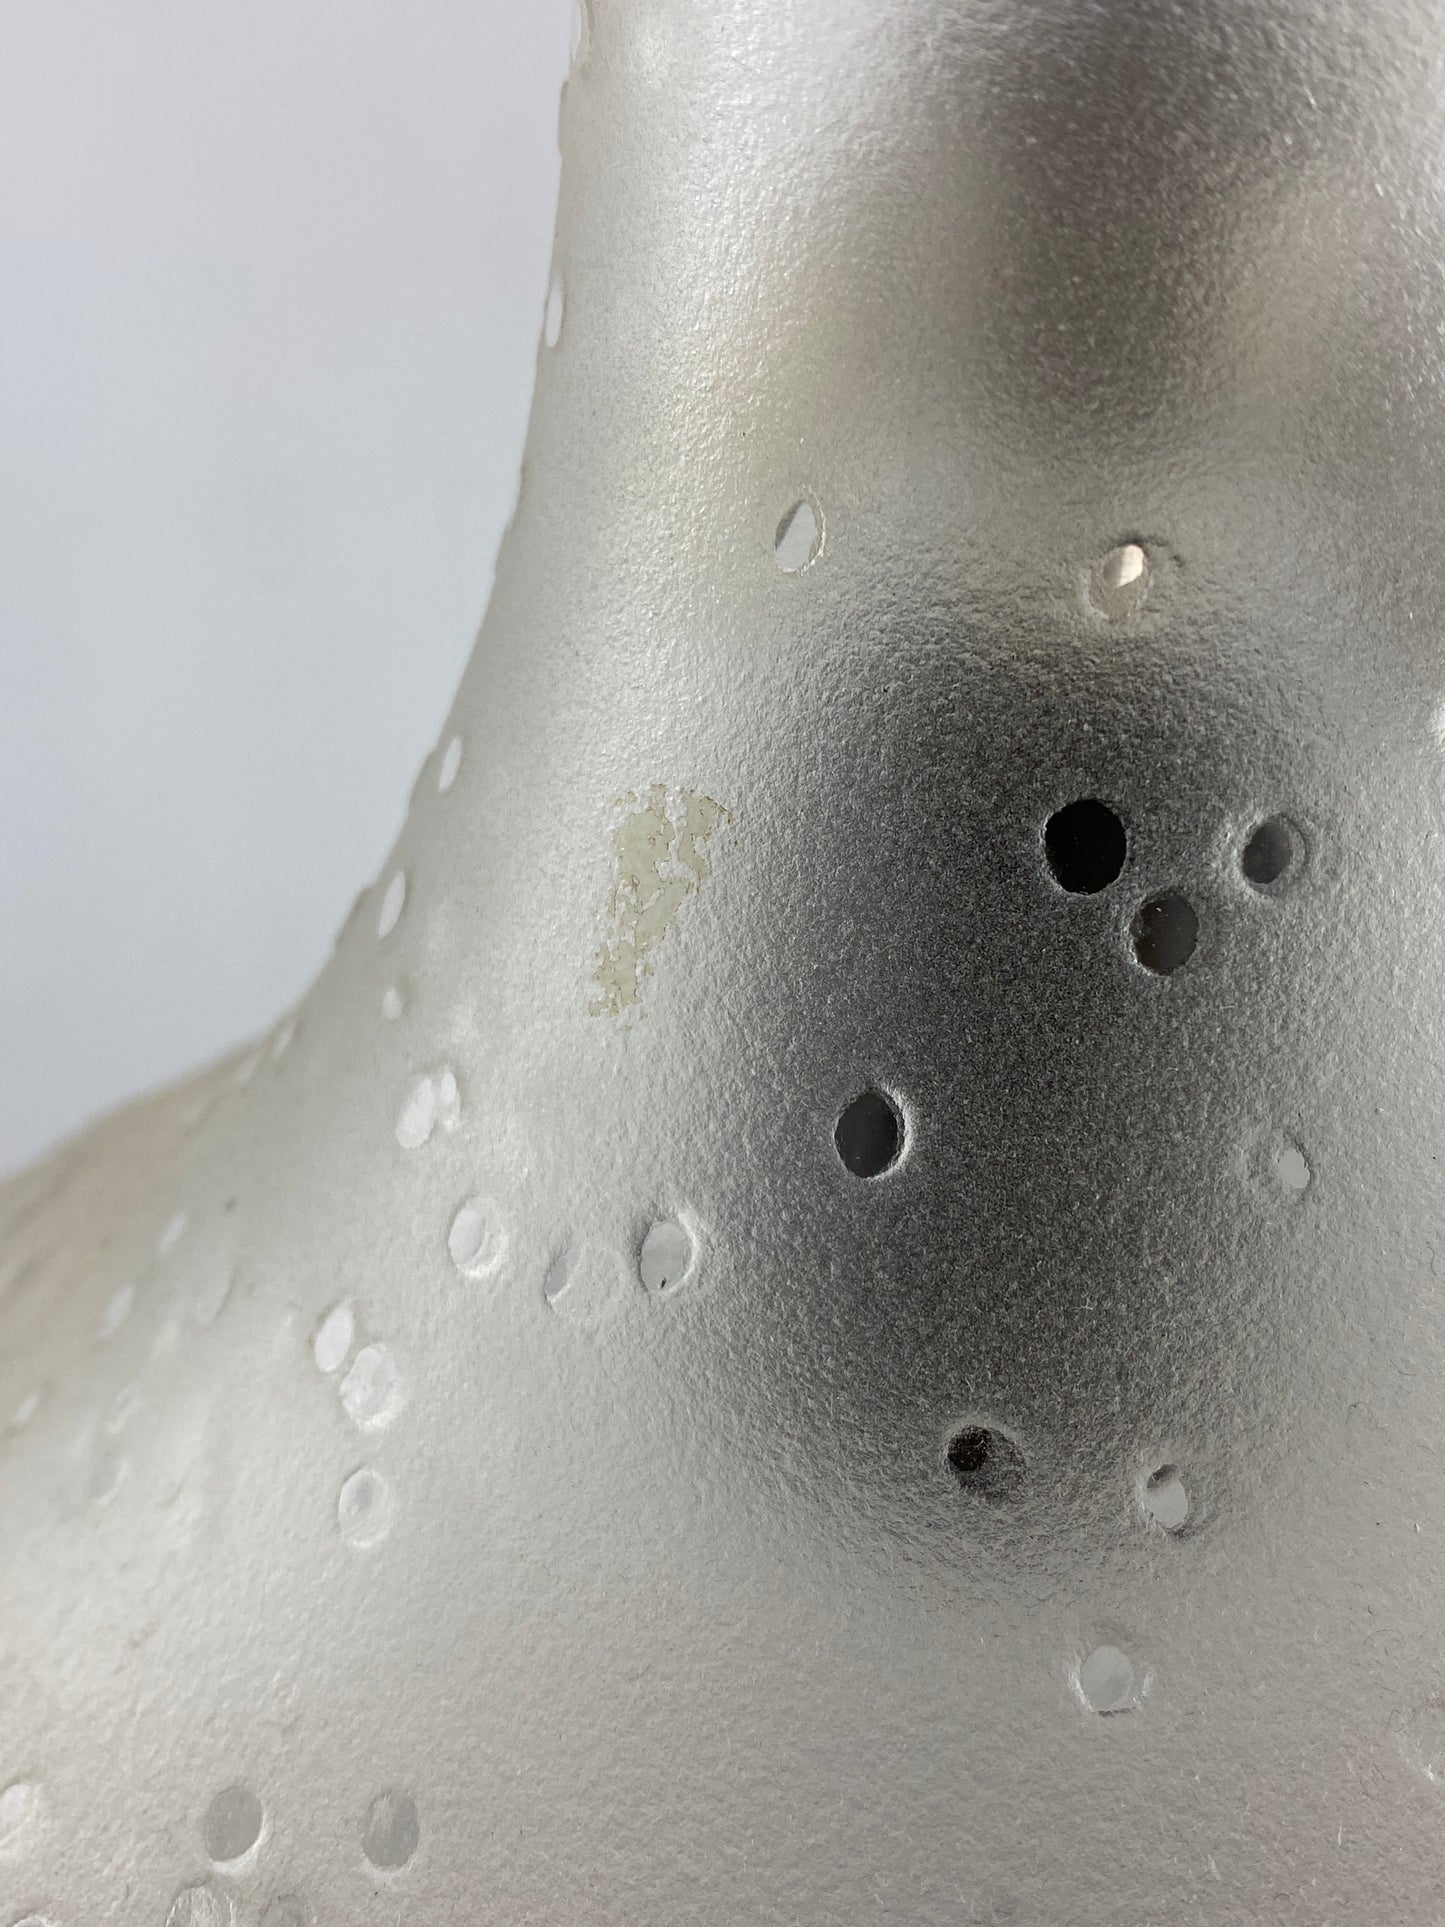 Droplet shaped large pendant light 'Patmos' by Horst Tüselmann for Peill & Putzler